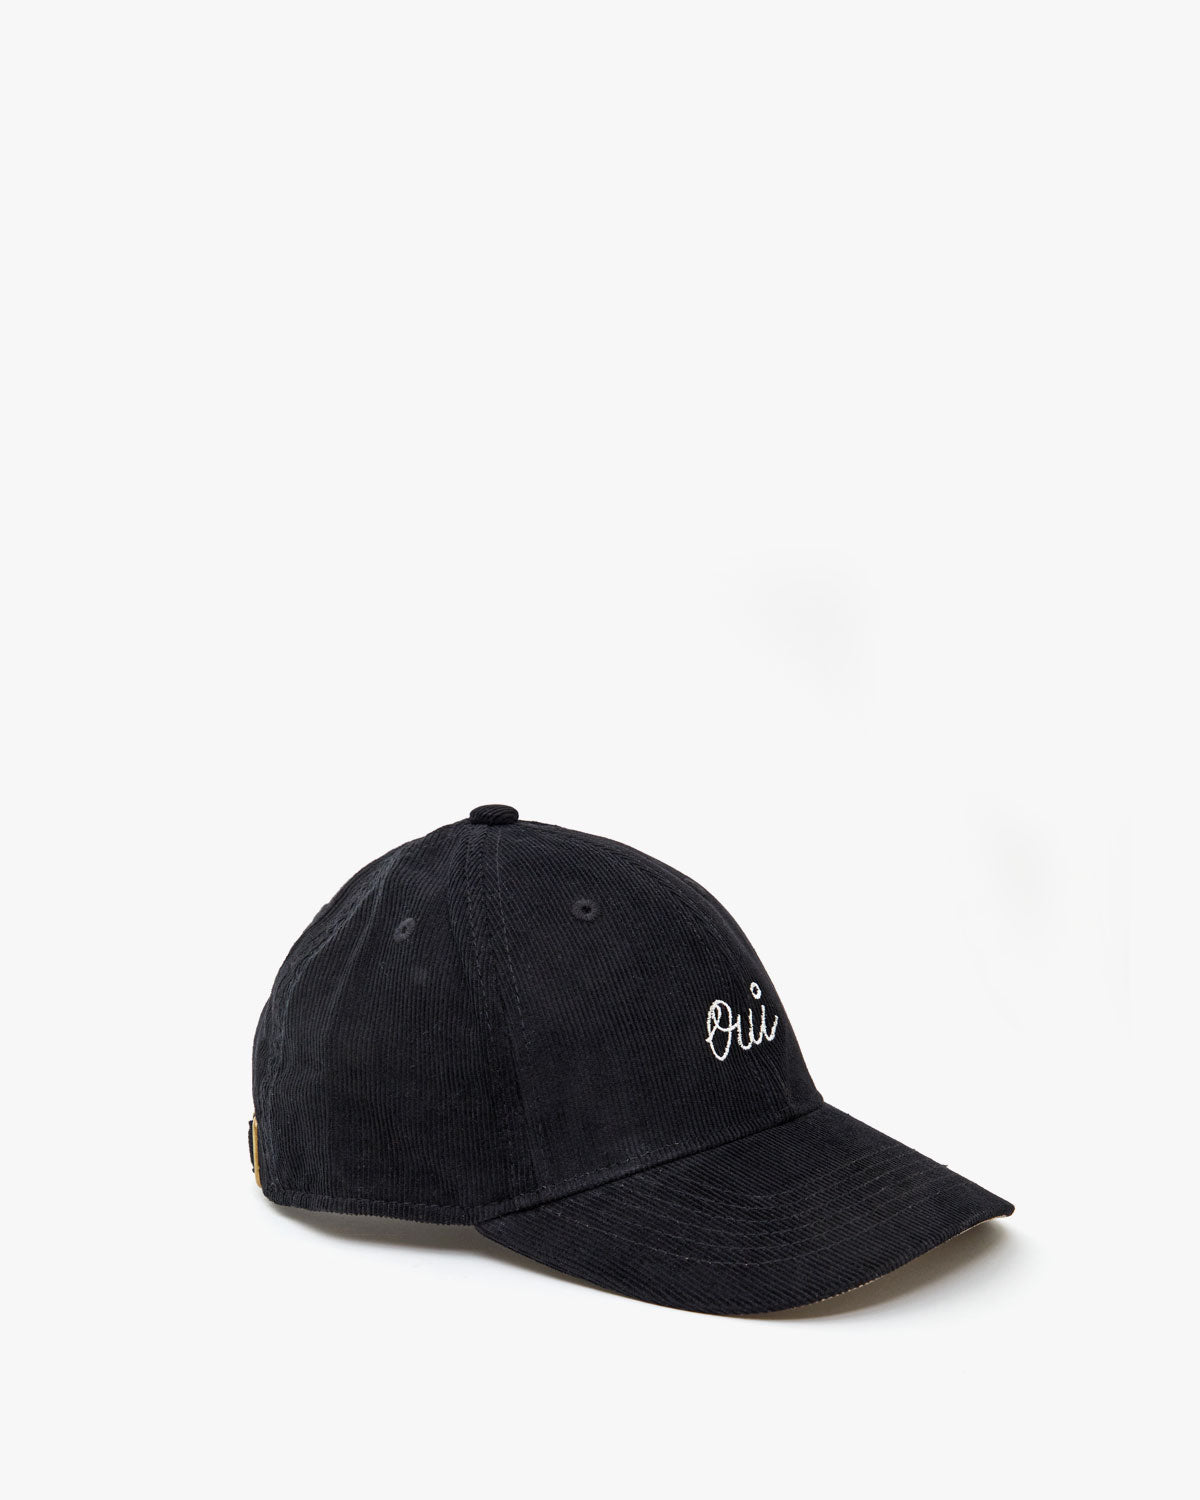 side view of the Black Corduroy Oui Baseball Hat